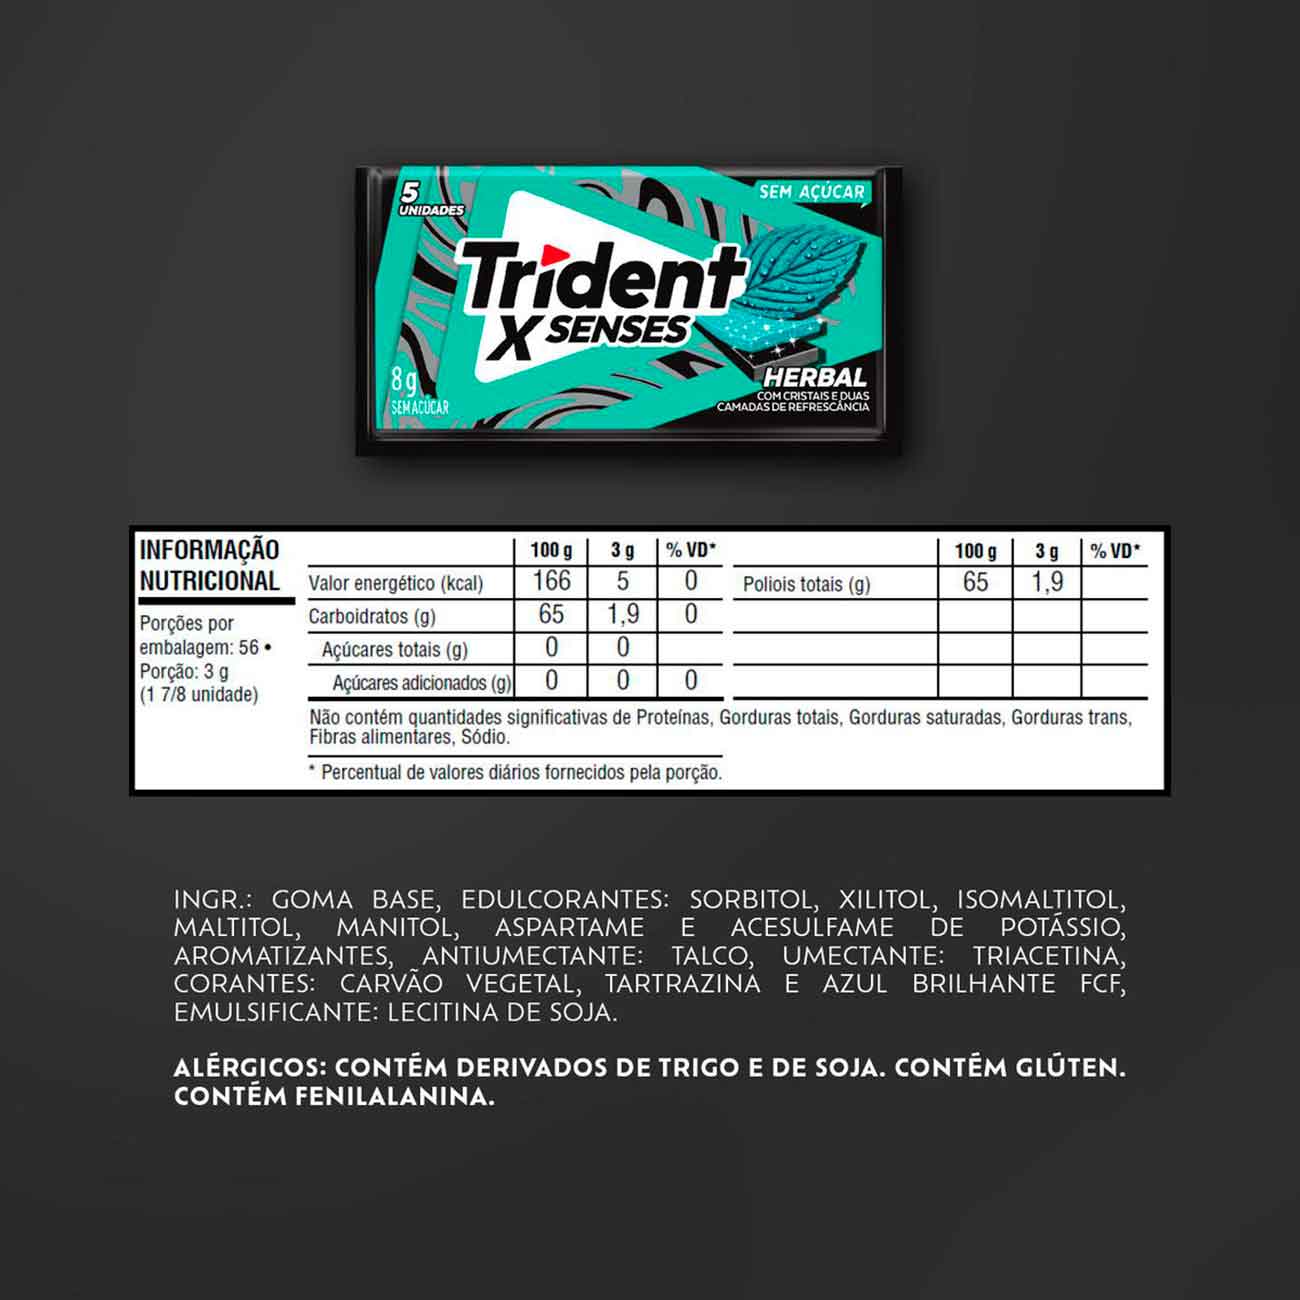 Chiclete Trident Xsenses Herbal Sem Acar - 21 Unidades de 8g